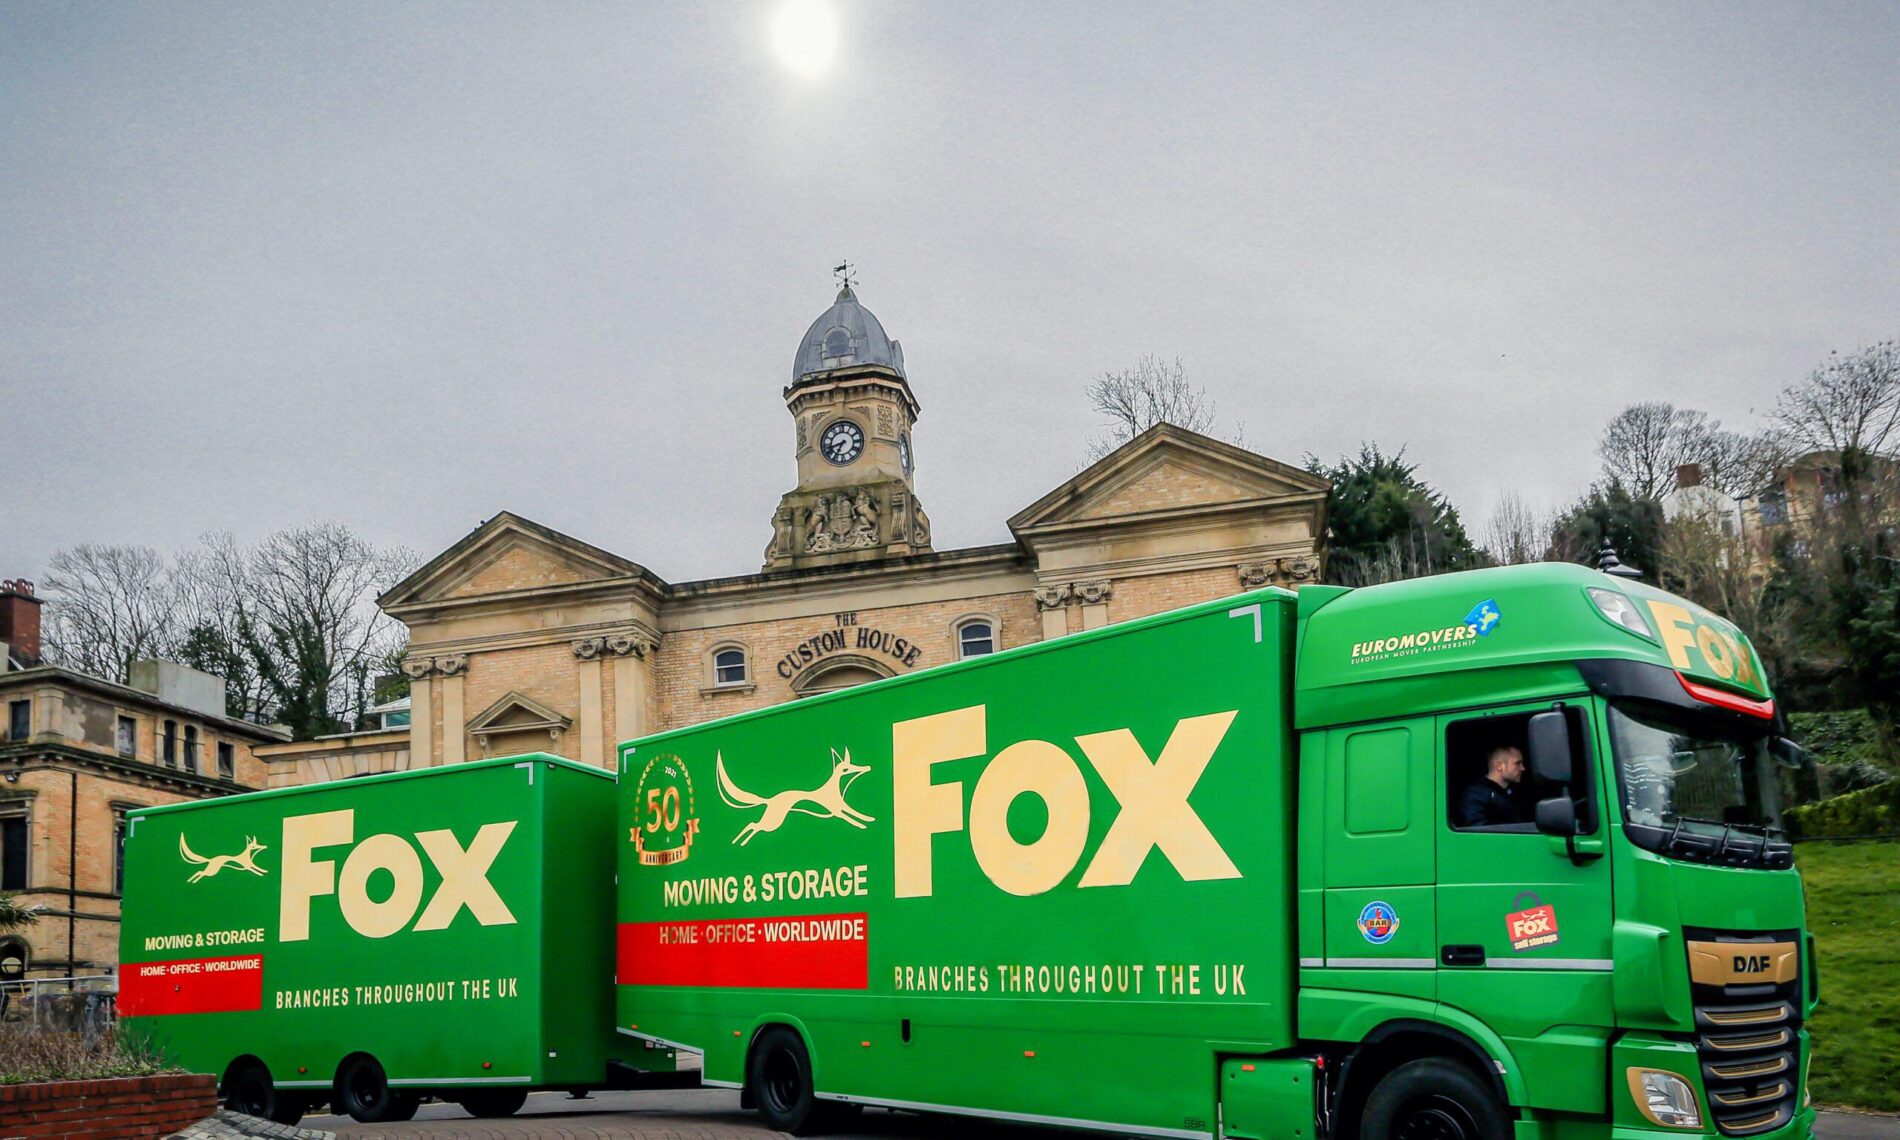 fox moving and storage 50th anniversary van